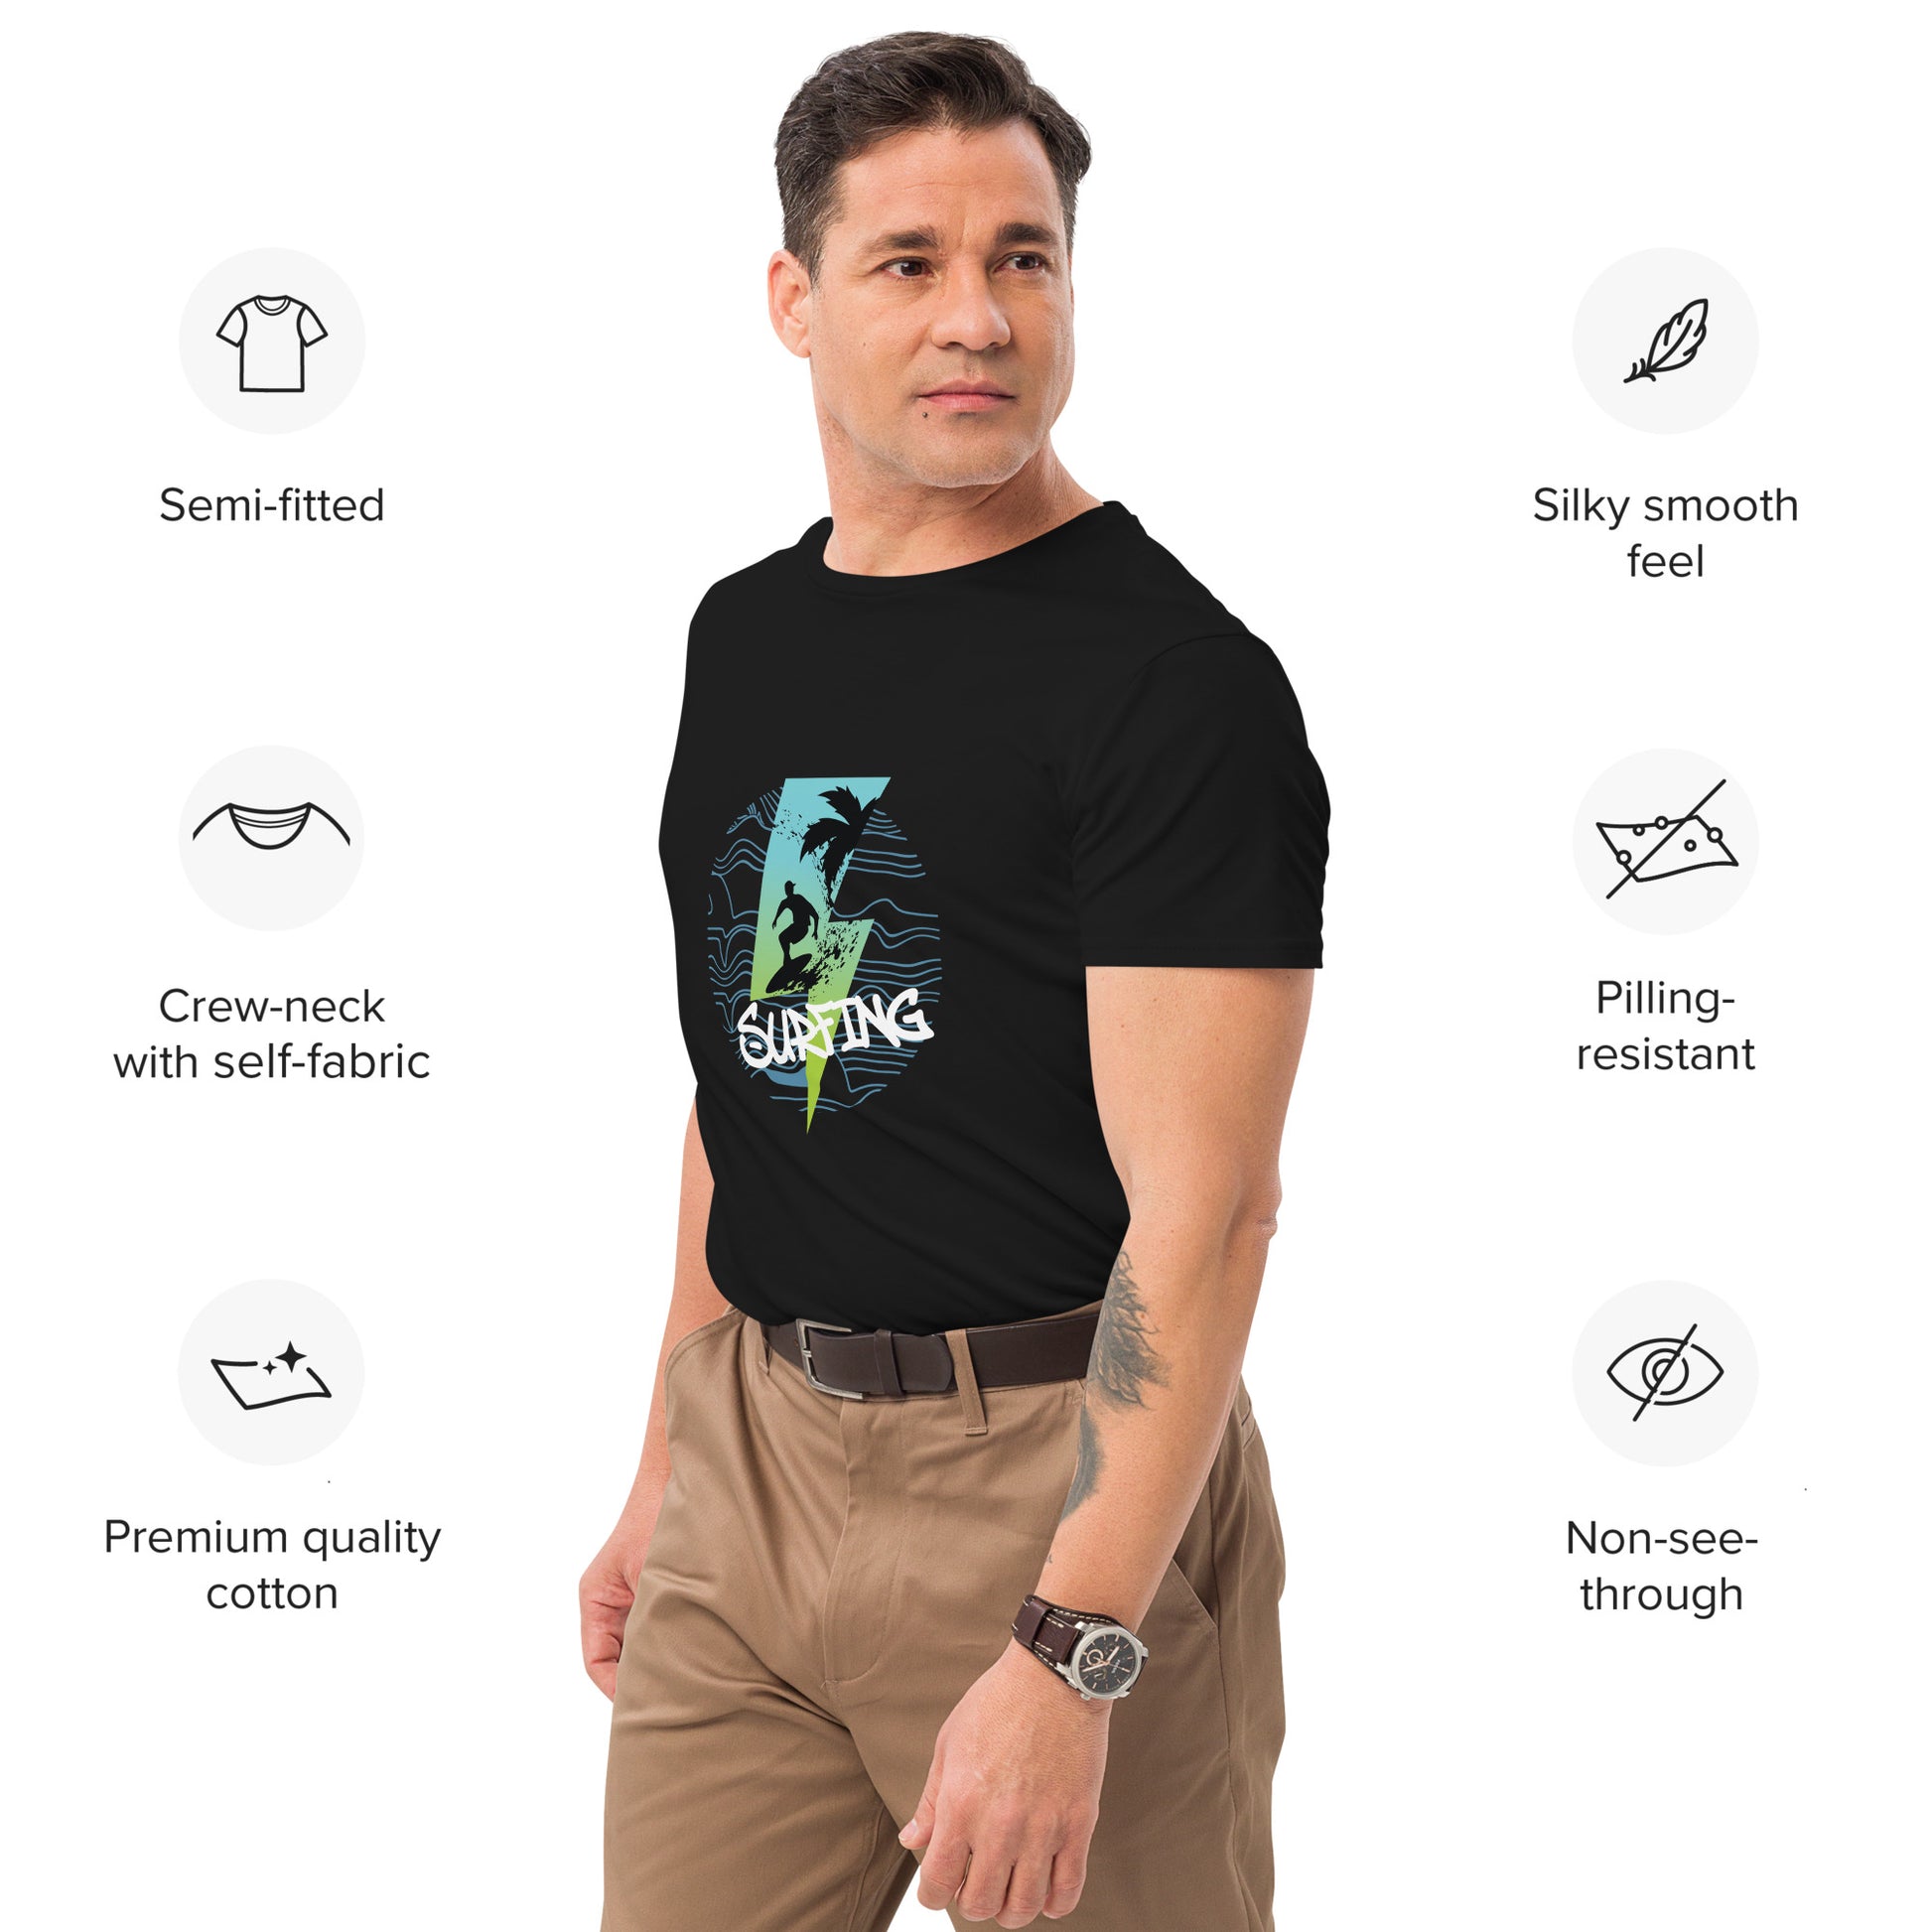 Surfing - Men's premium cotton t-shirt - HobbyMeFree